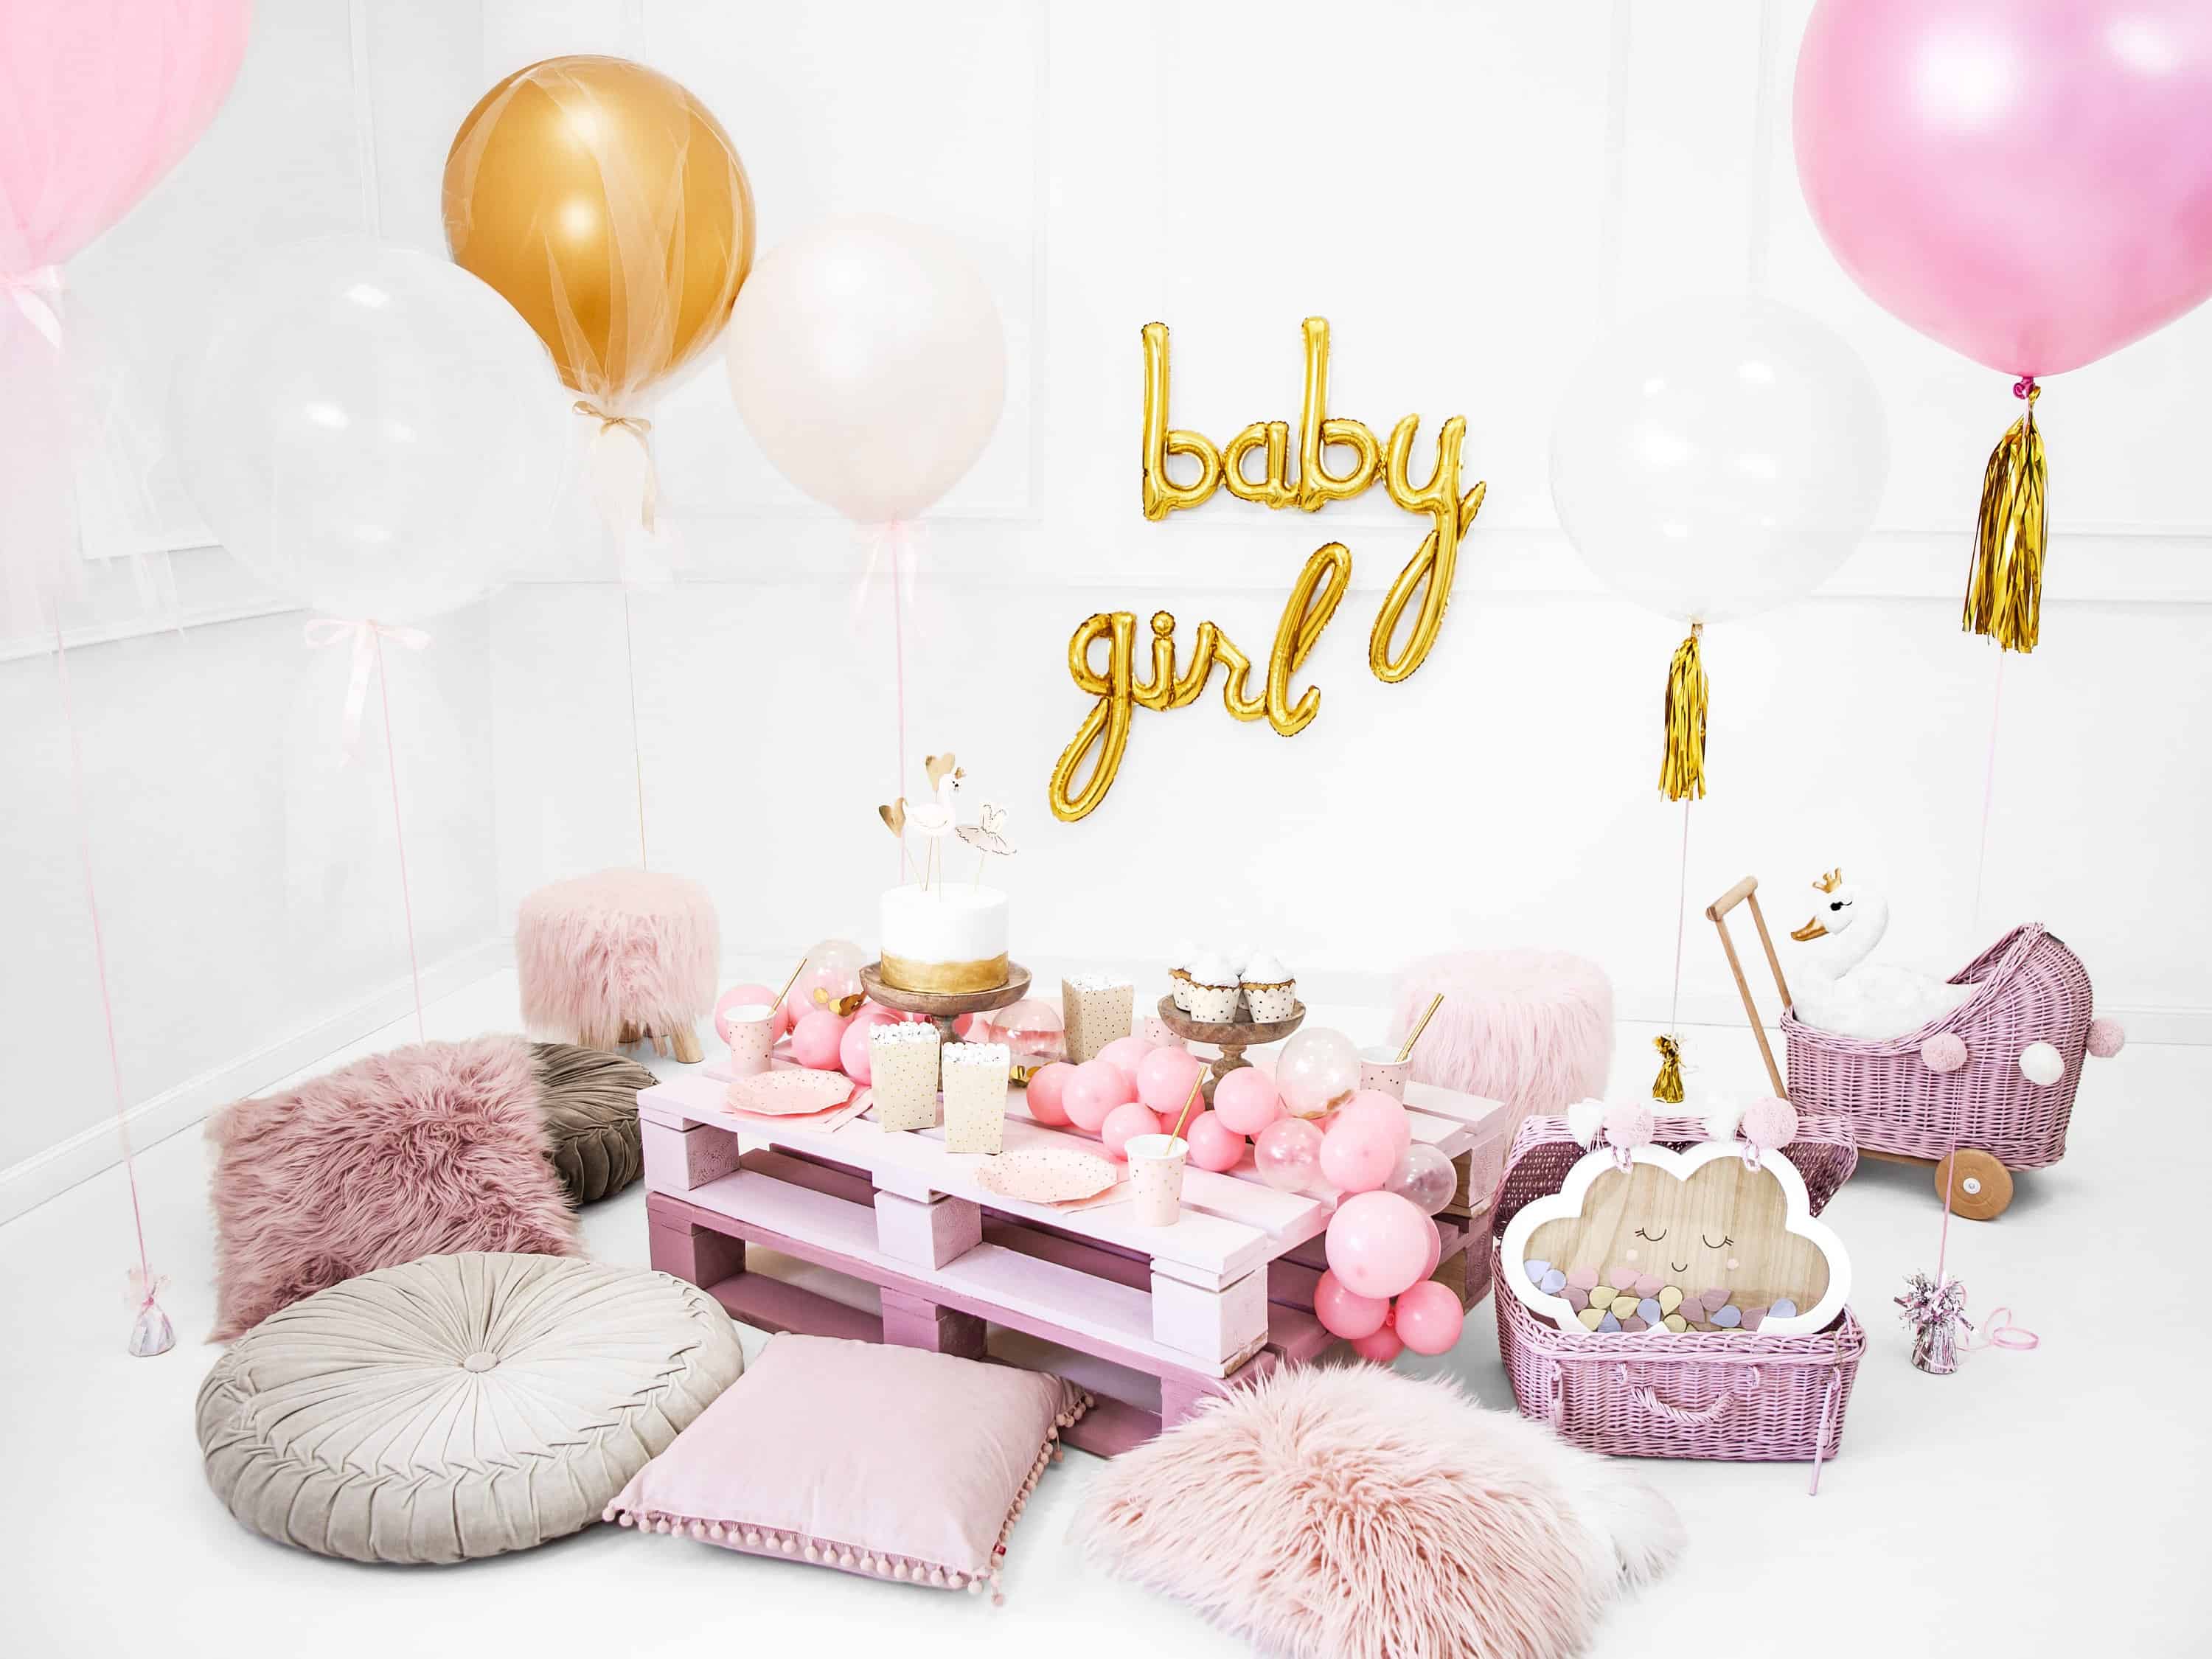 Baby girl foil balloon